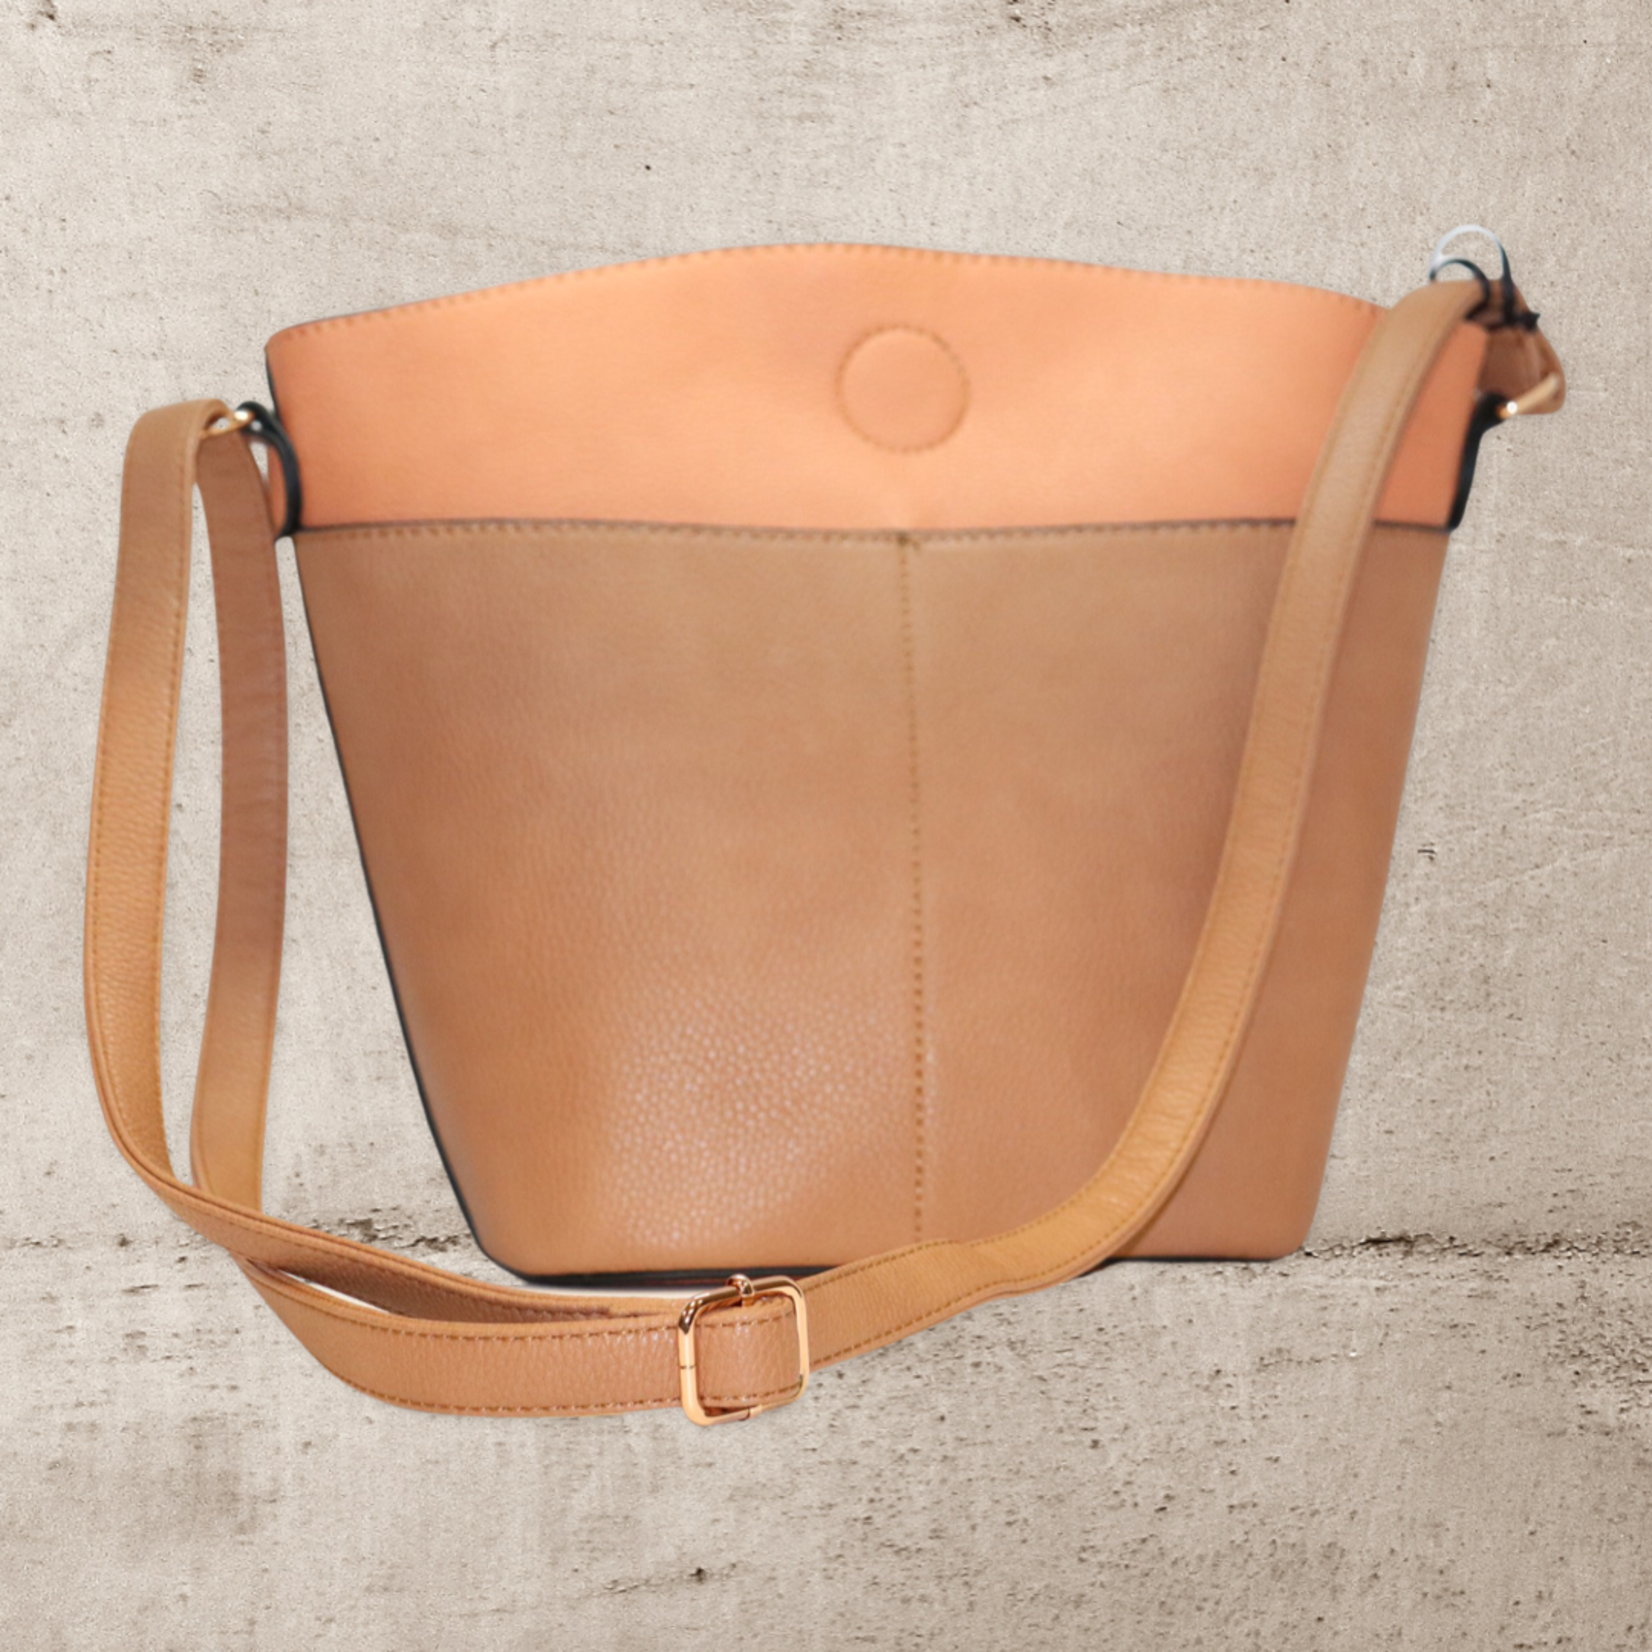 Jendi Coral & Tan with Side Pocket Large Handbag